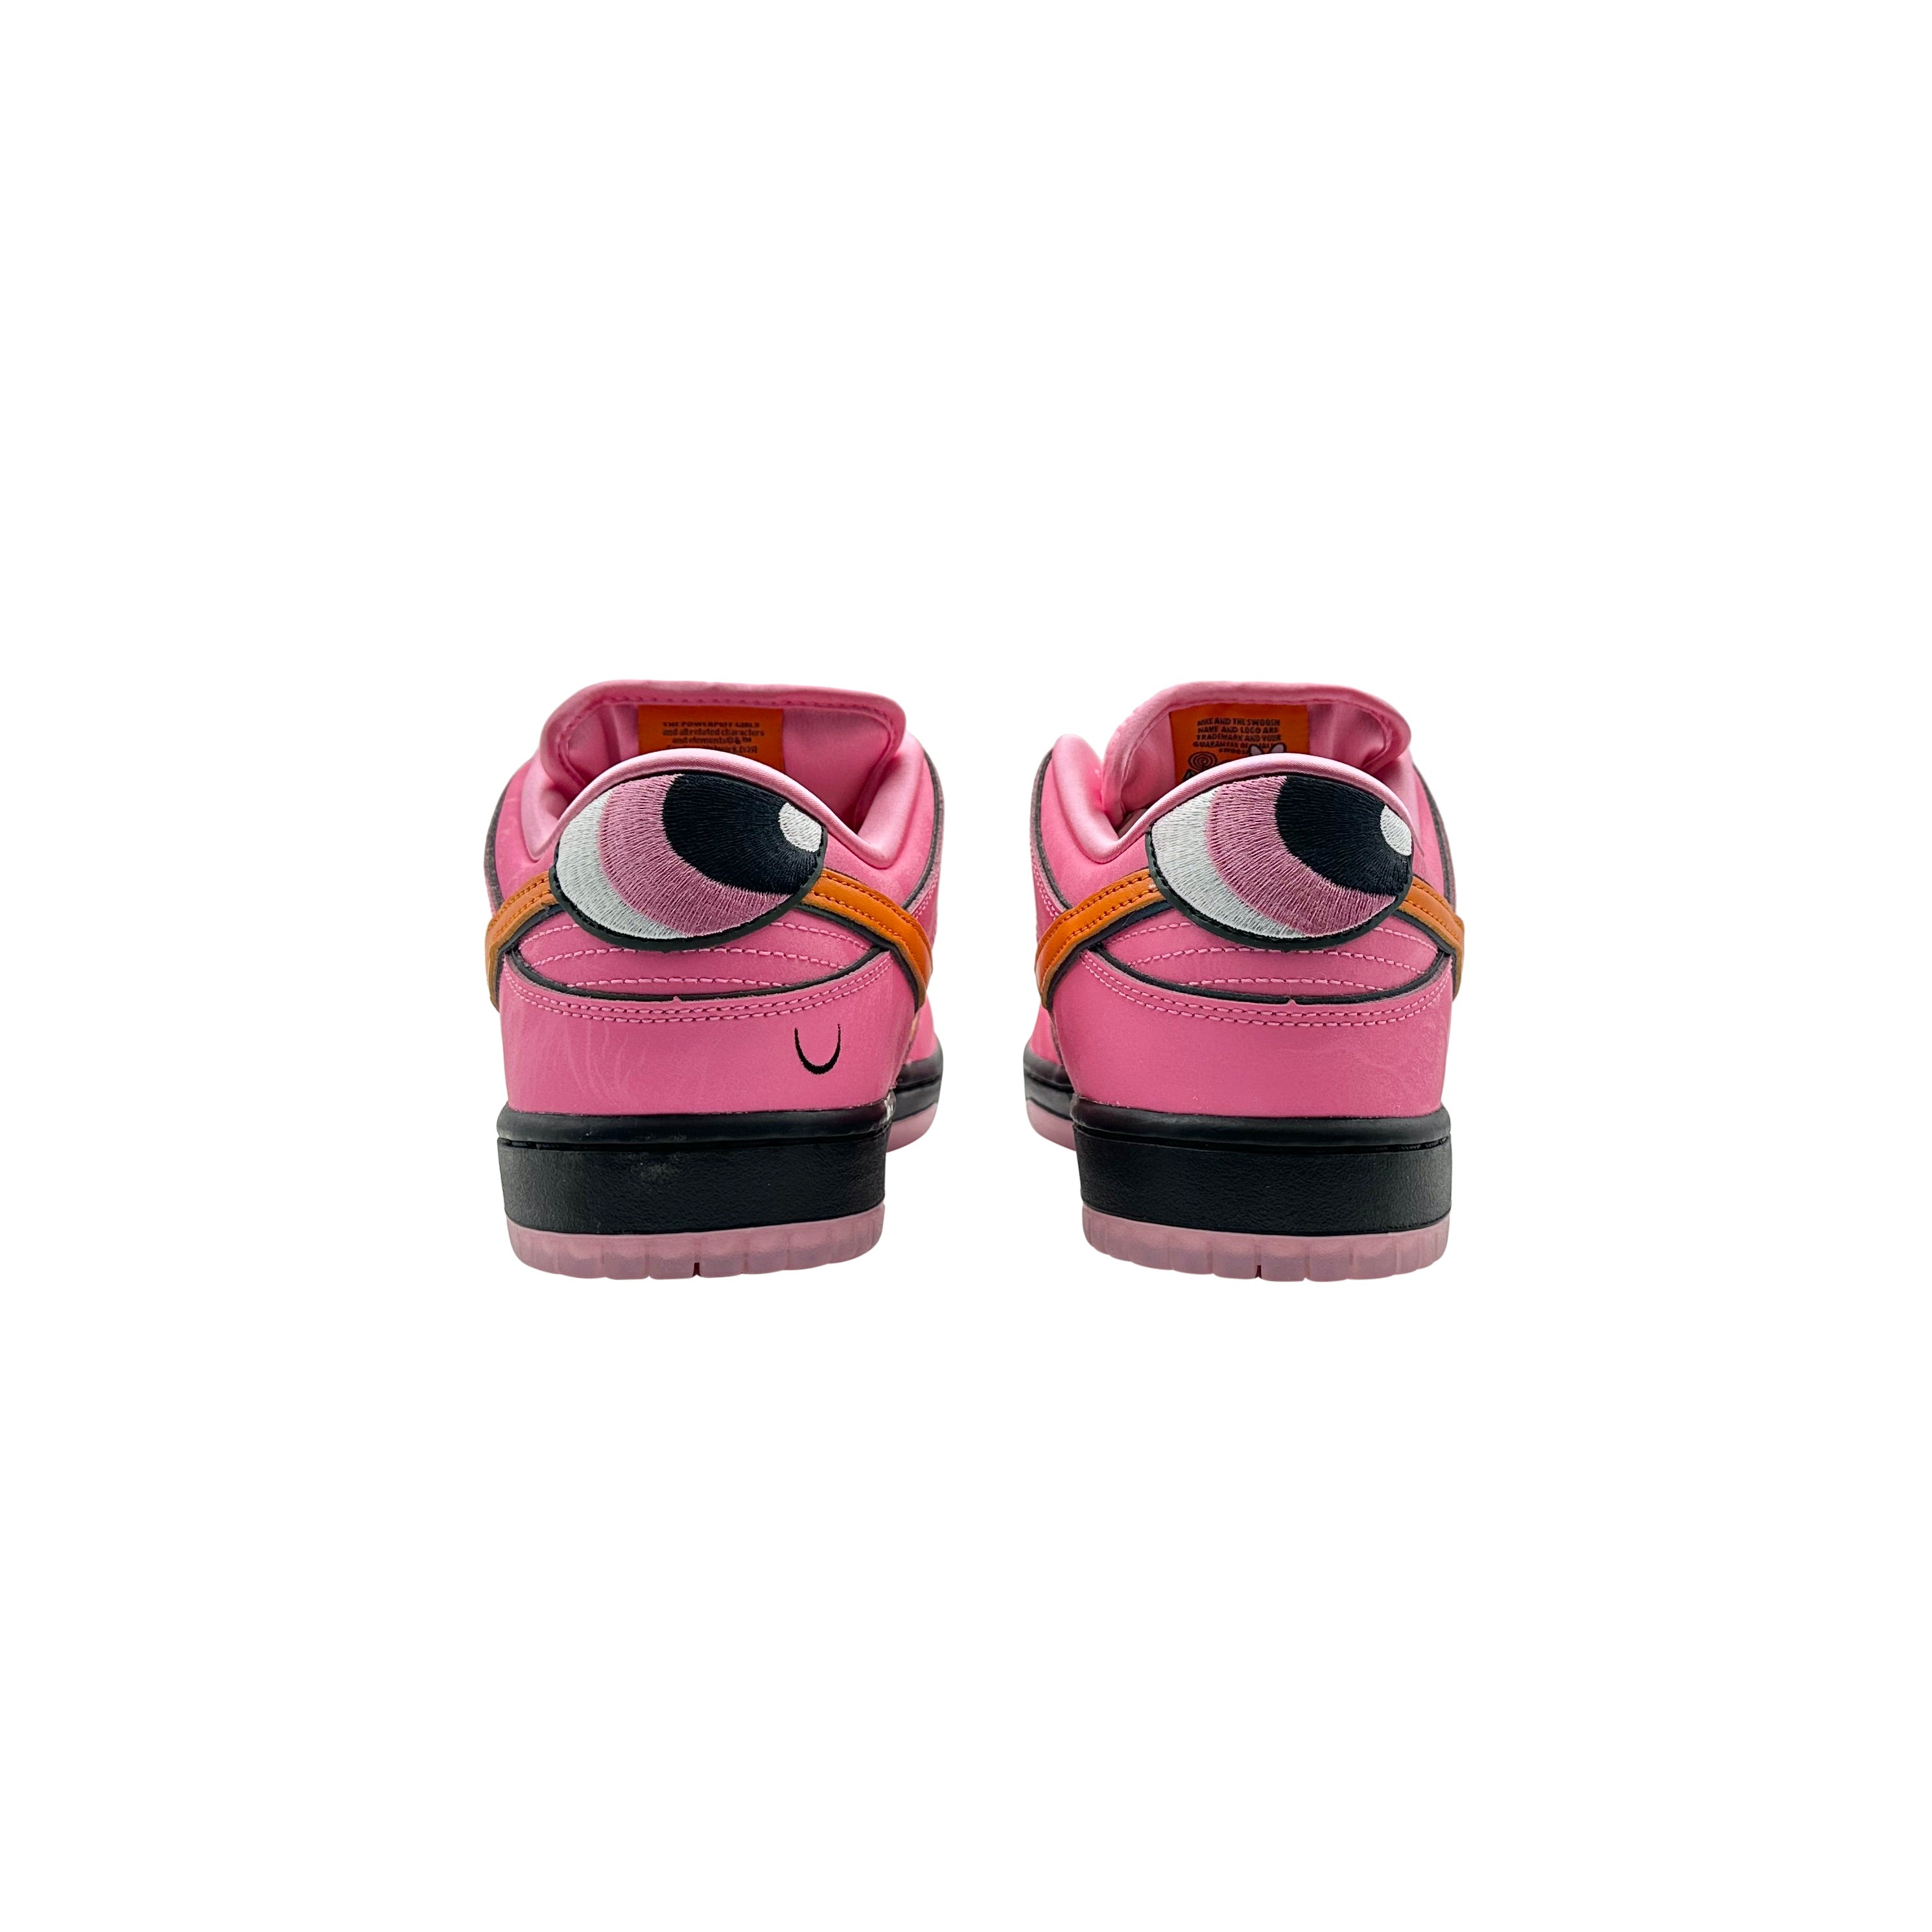 Nike SB Dunk Low Pro The Powerpuff Girls Blossom Pink